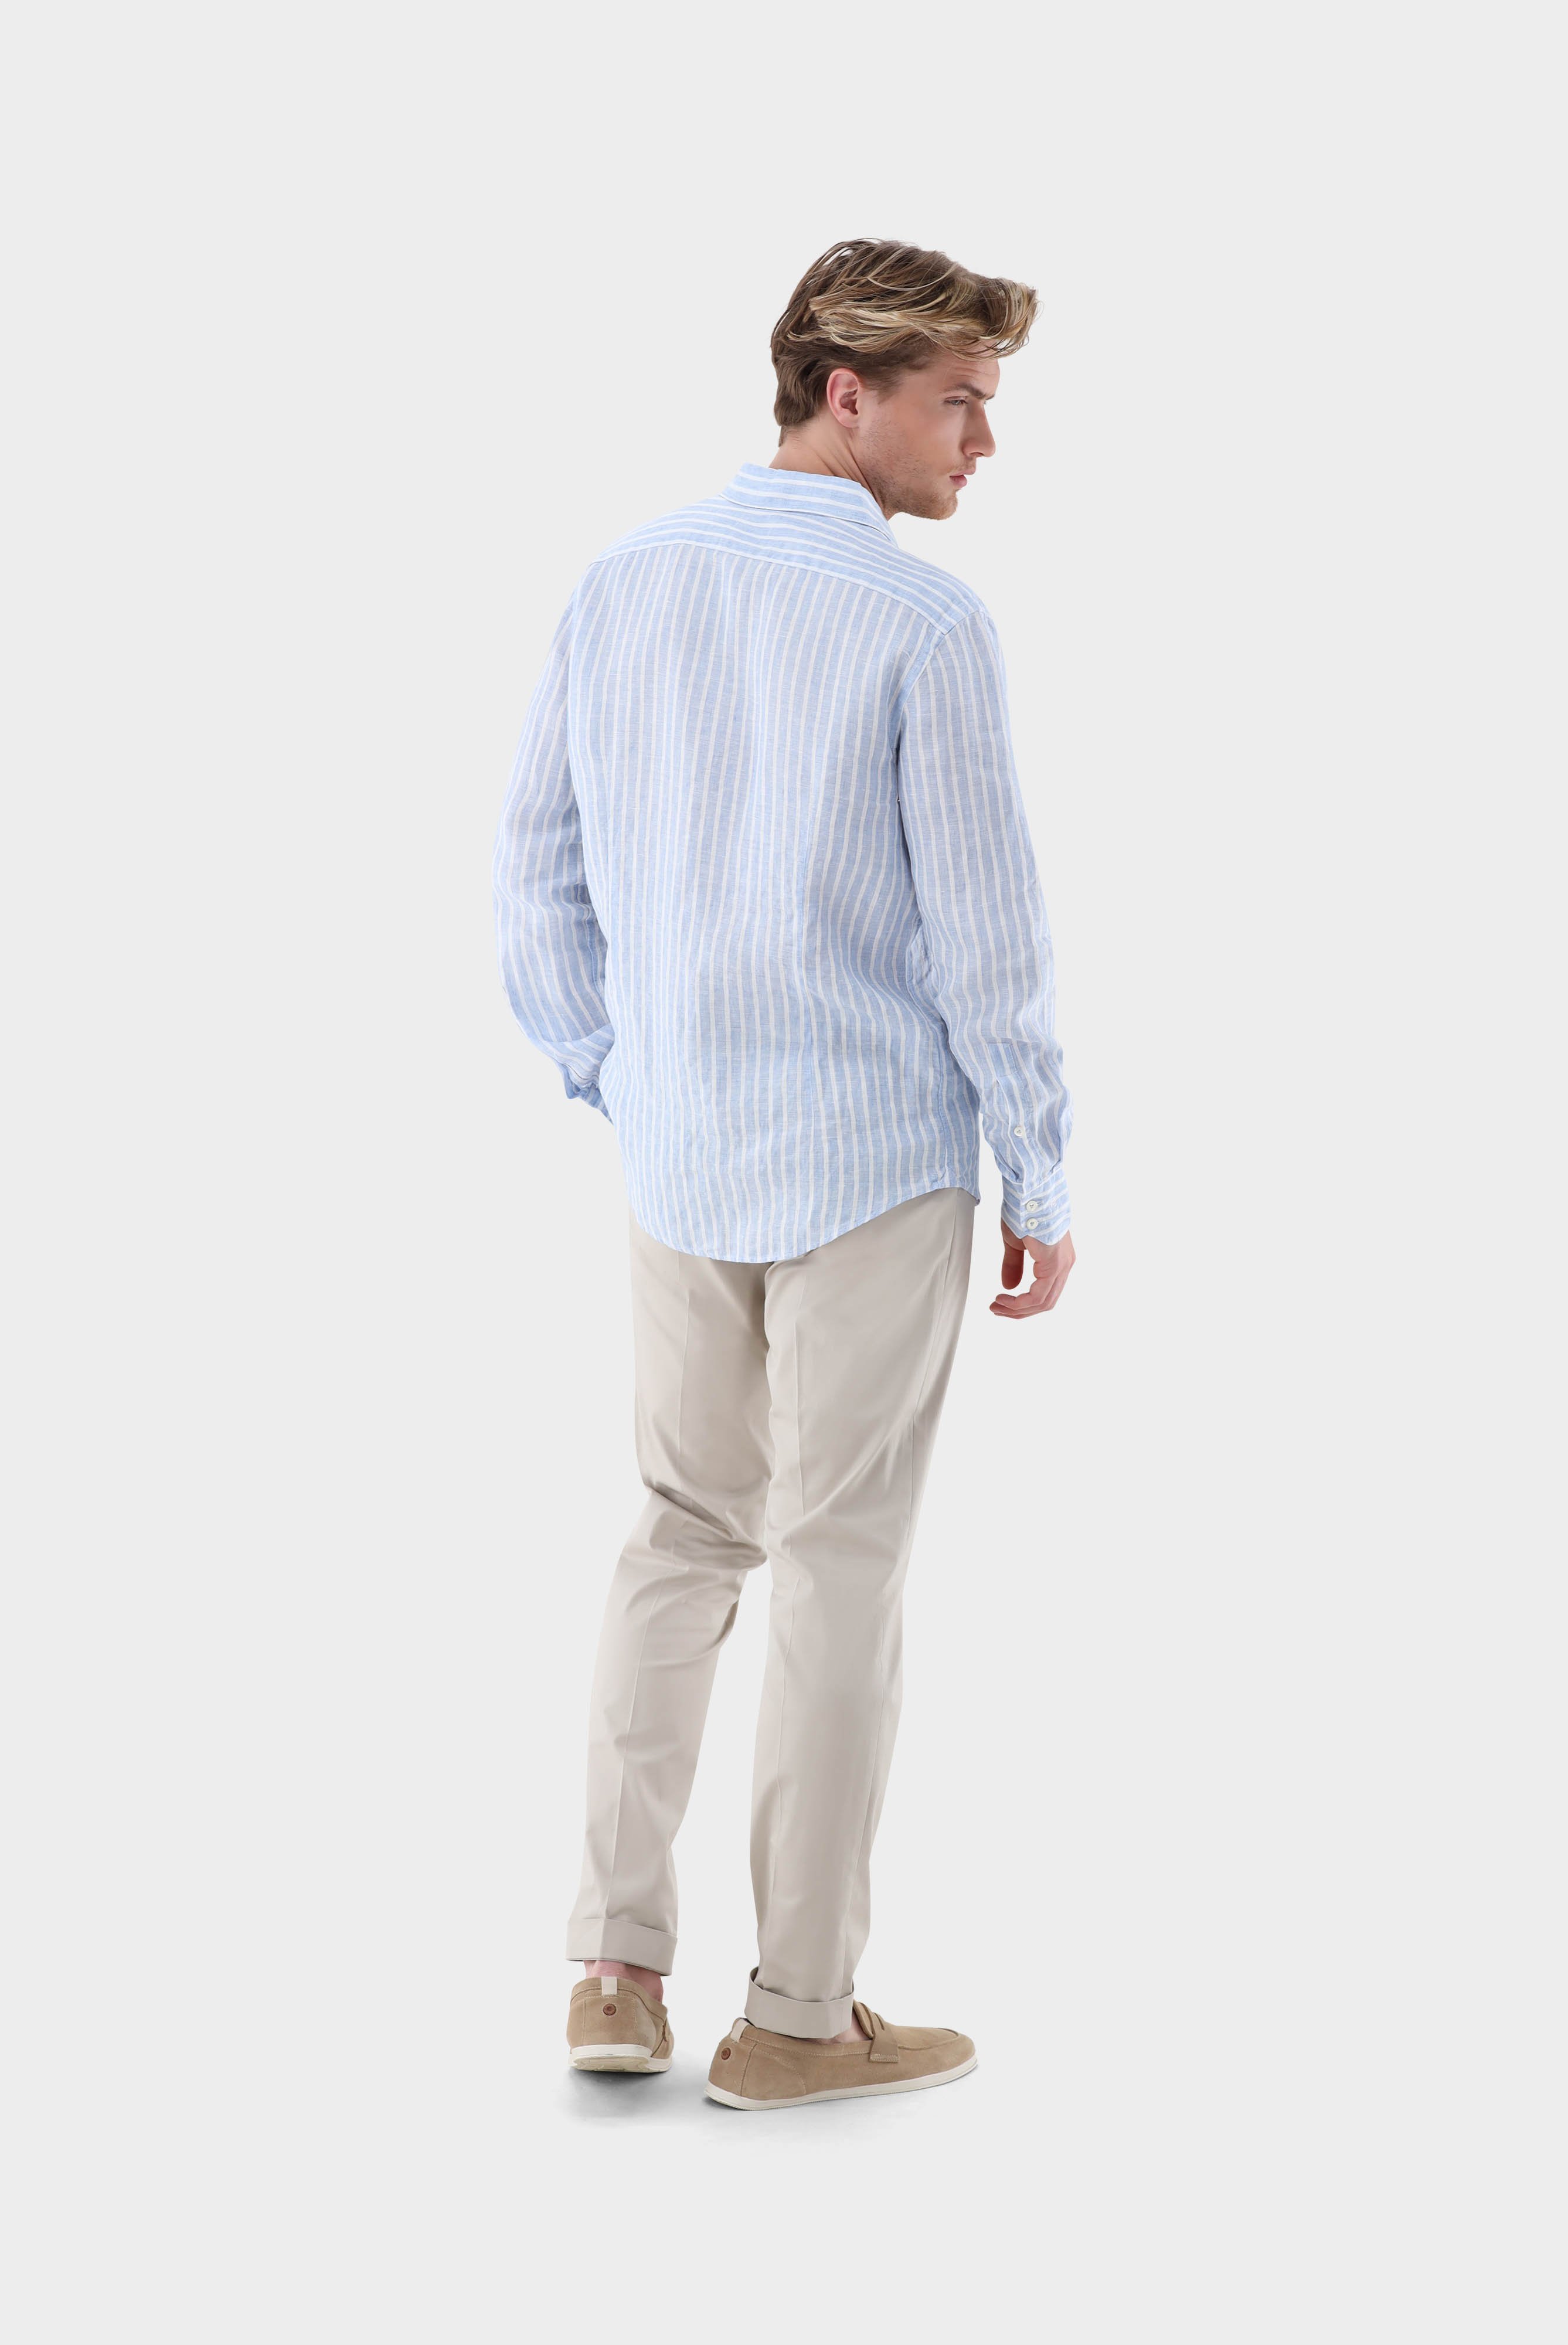 Casual Hemden+Gestreiftes Hemd aus Leinen-Dobby Tailor Fit+20.2016.9V.156441.730.38